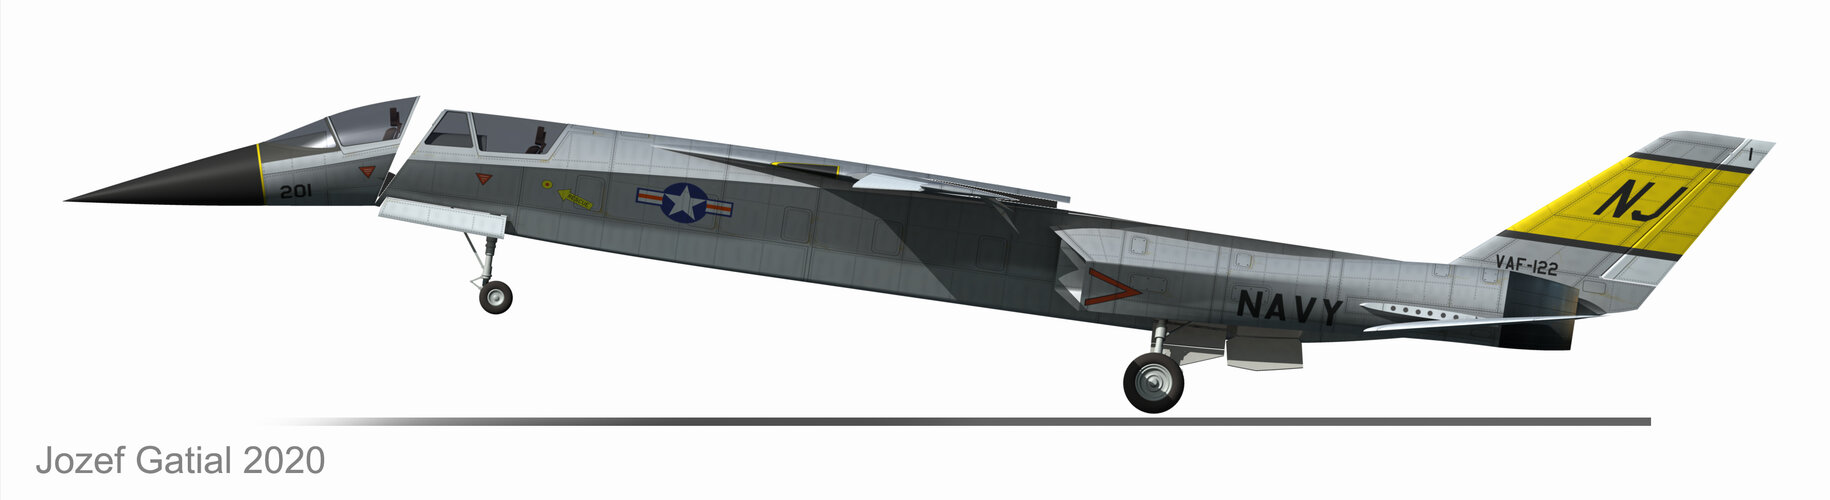 Lockheed CL-1200 side2.jpg